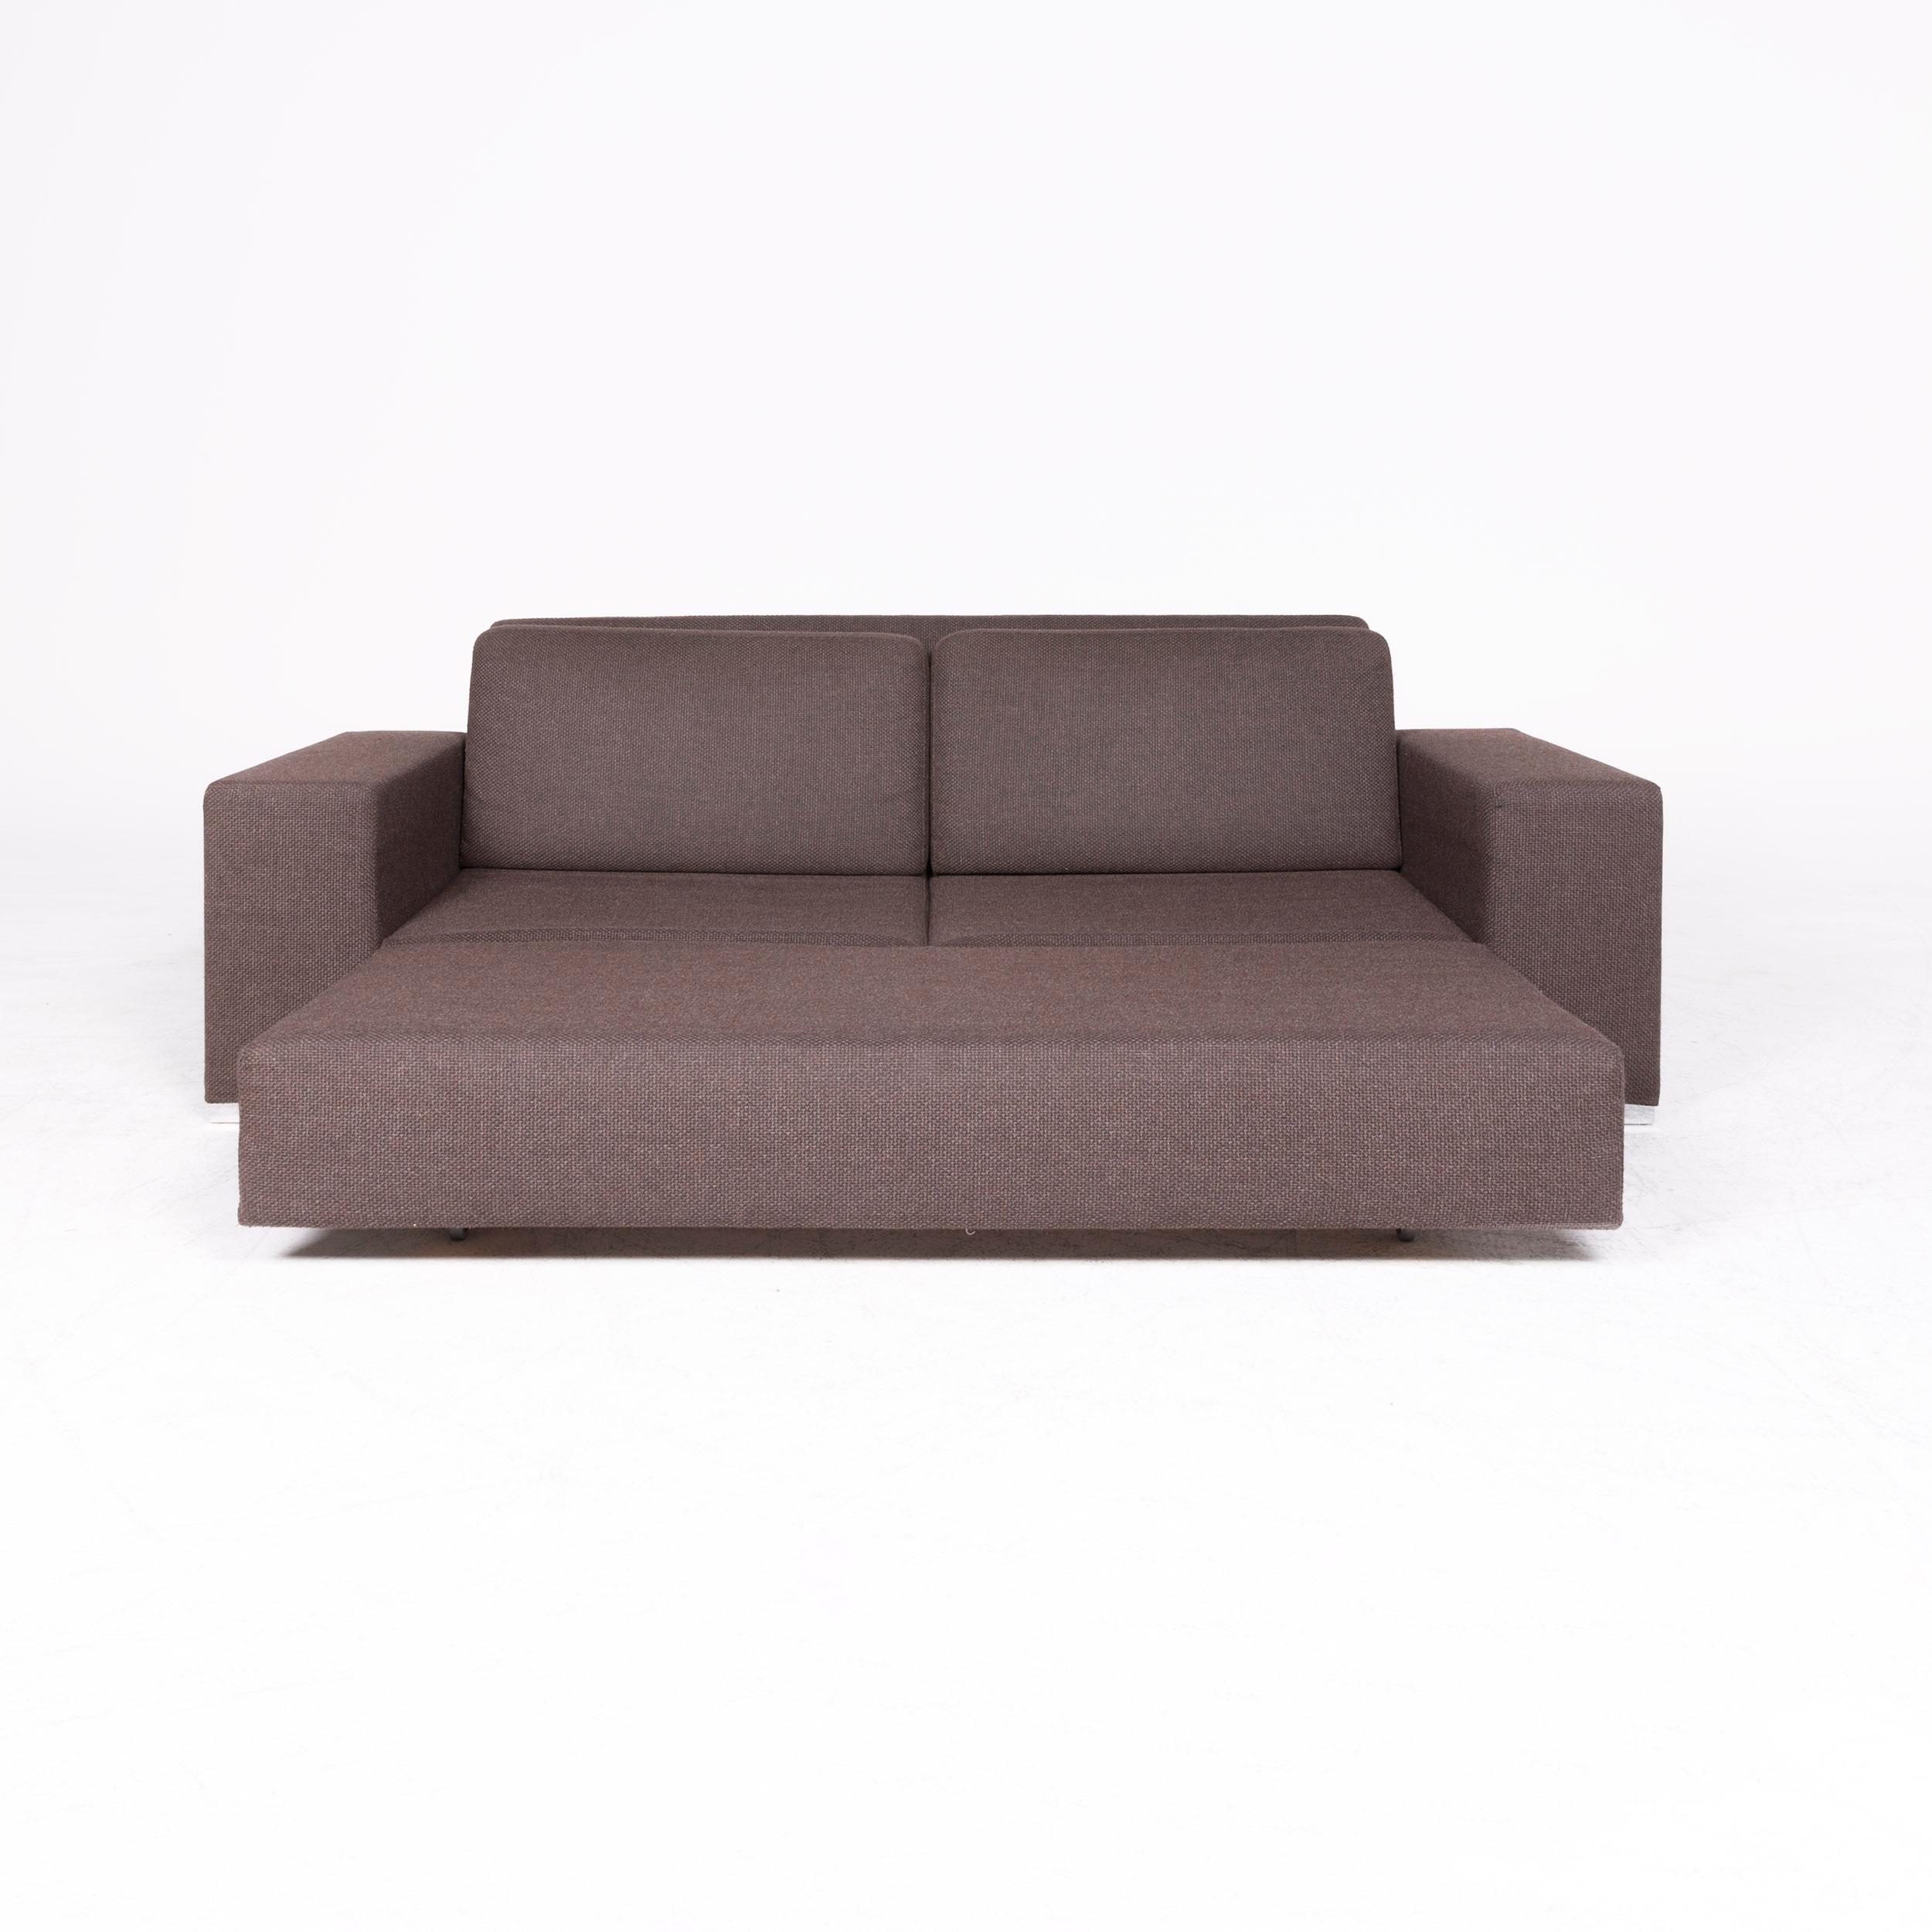 German Brühl & Sippold Designer Fabric Sofa Brown Two-Seat Sofa Function Sofa Bed